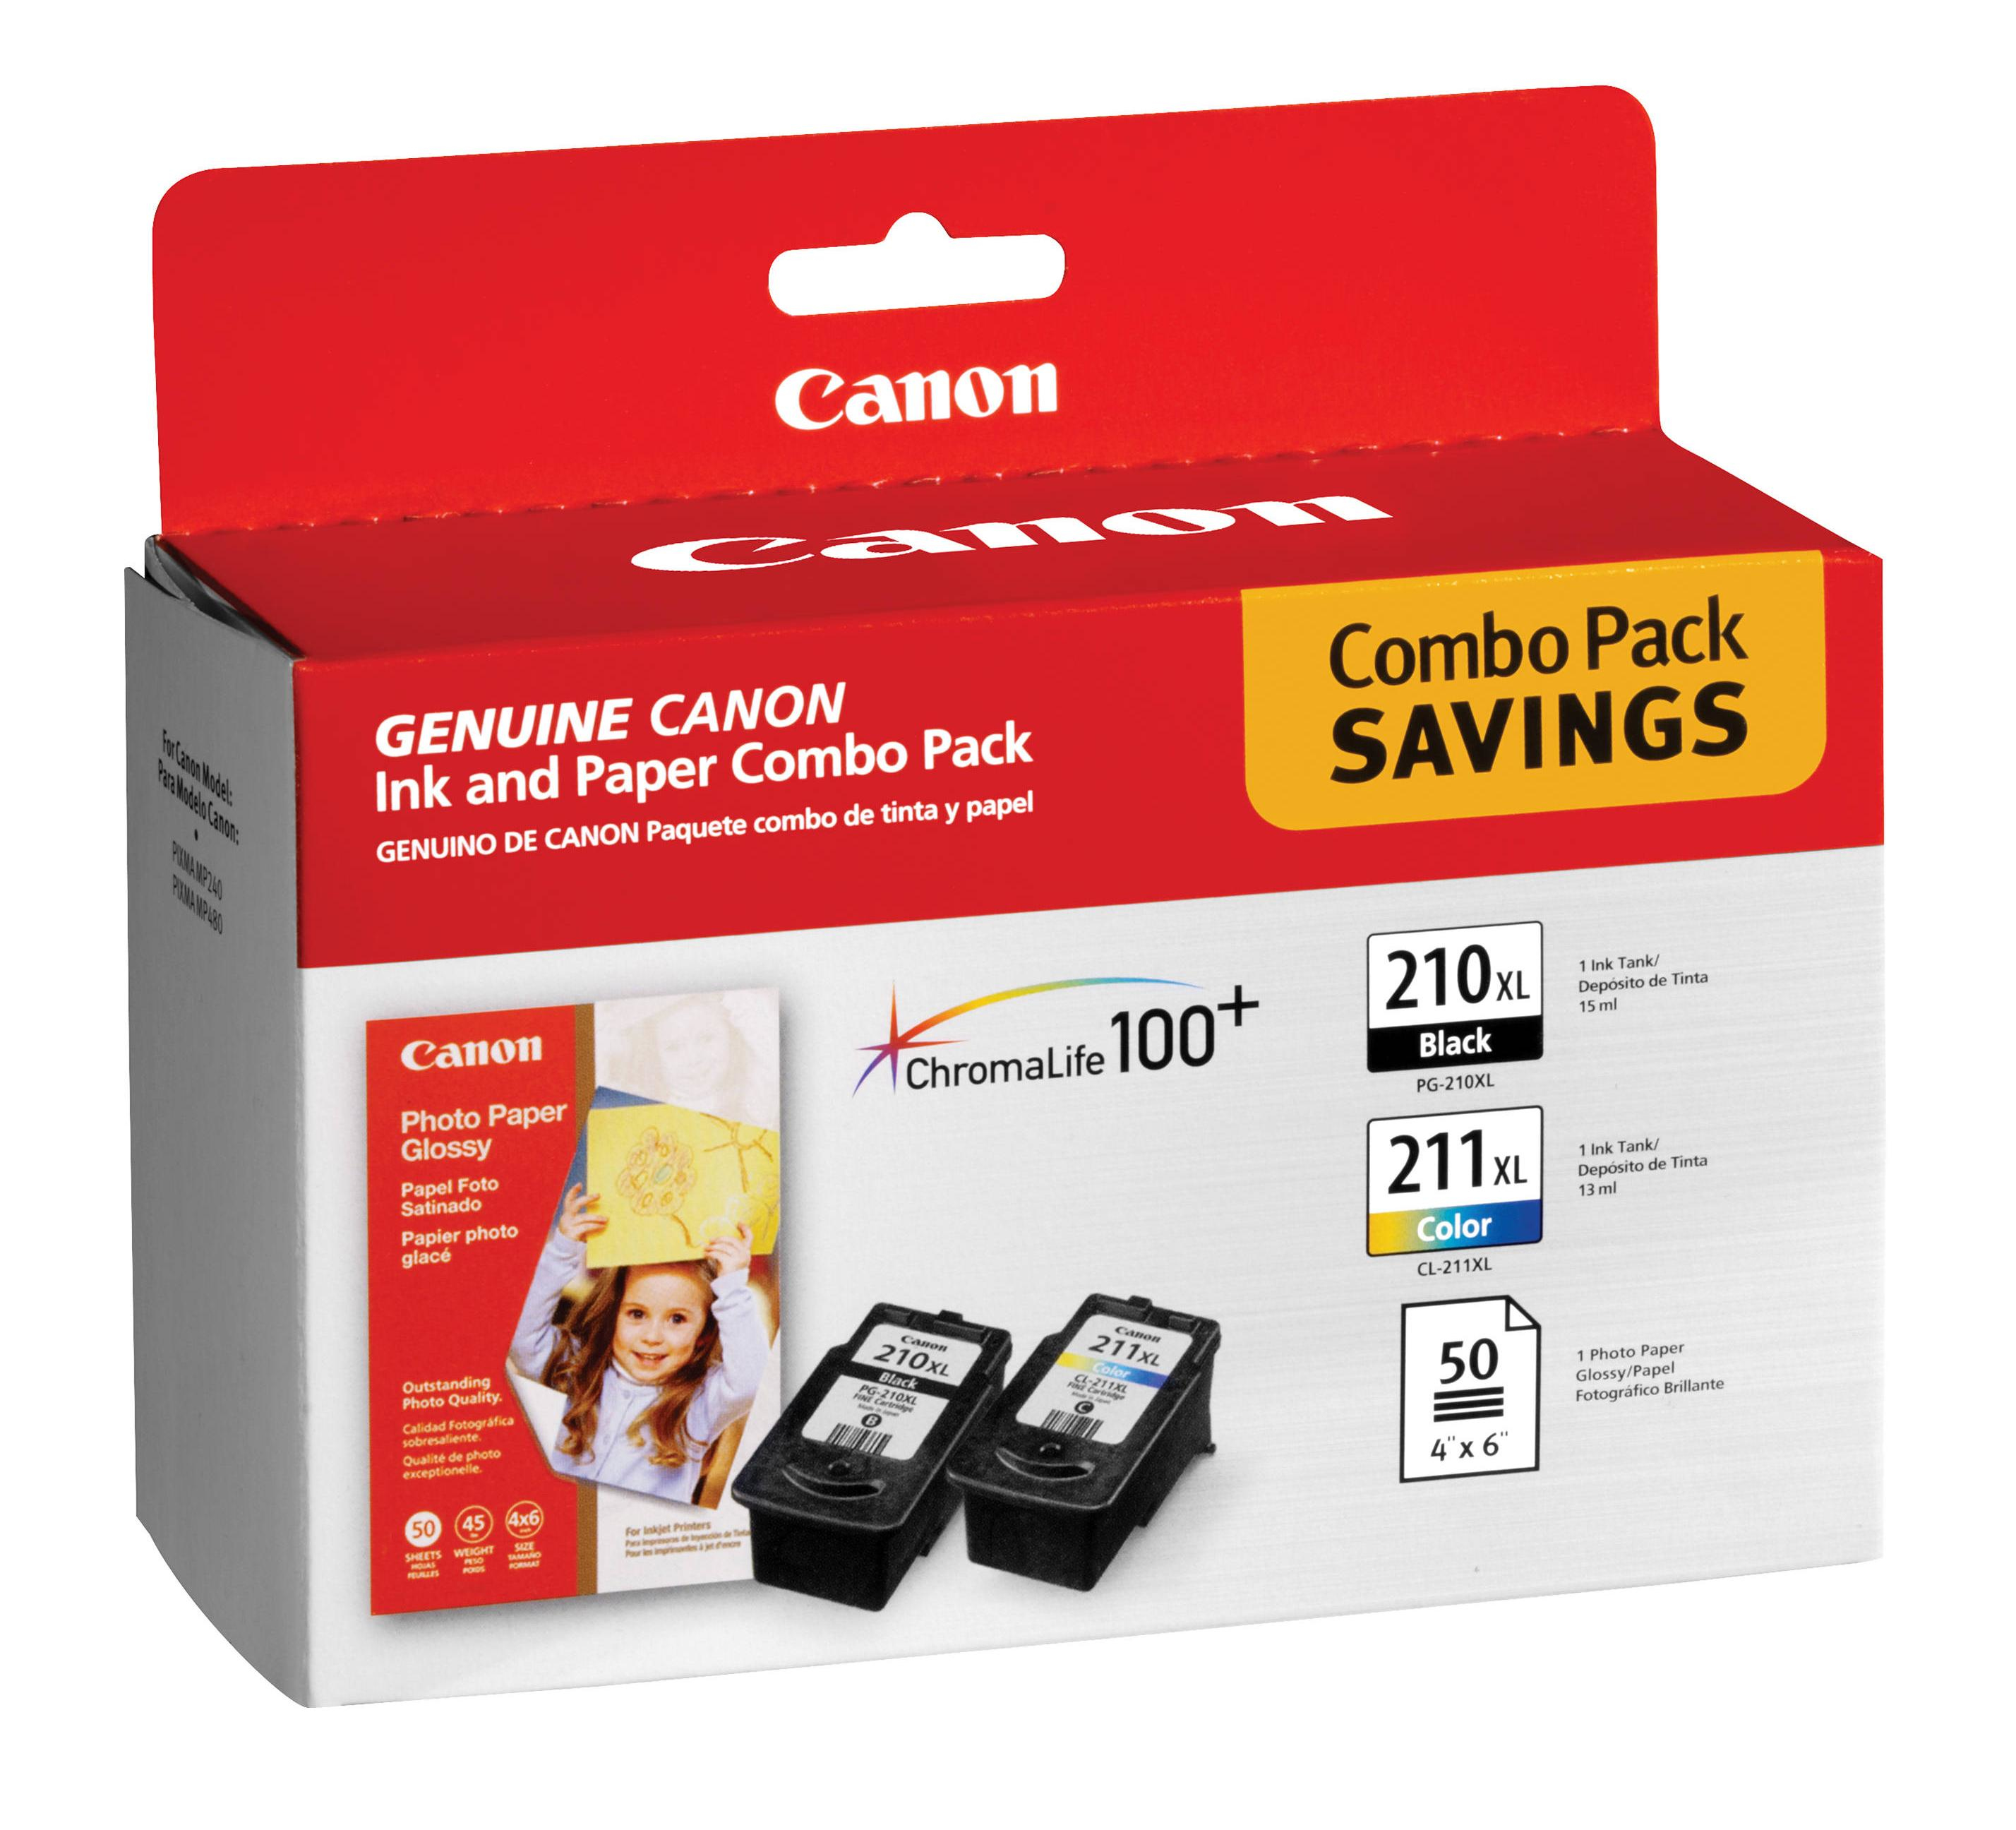 canon mp490 printer cartridge